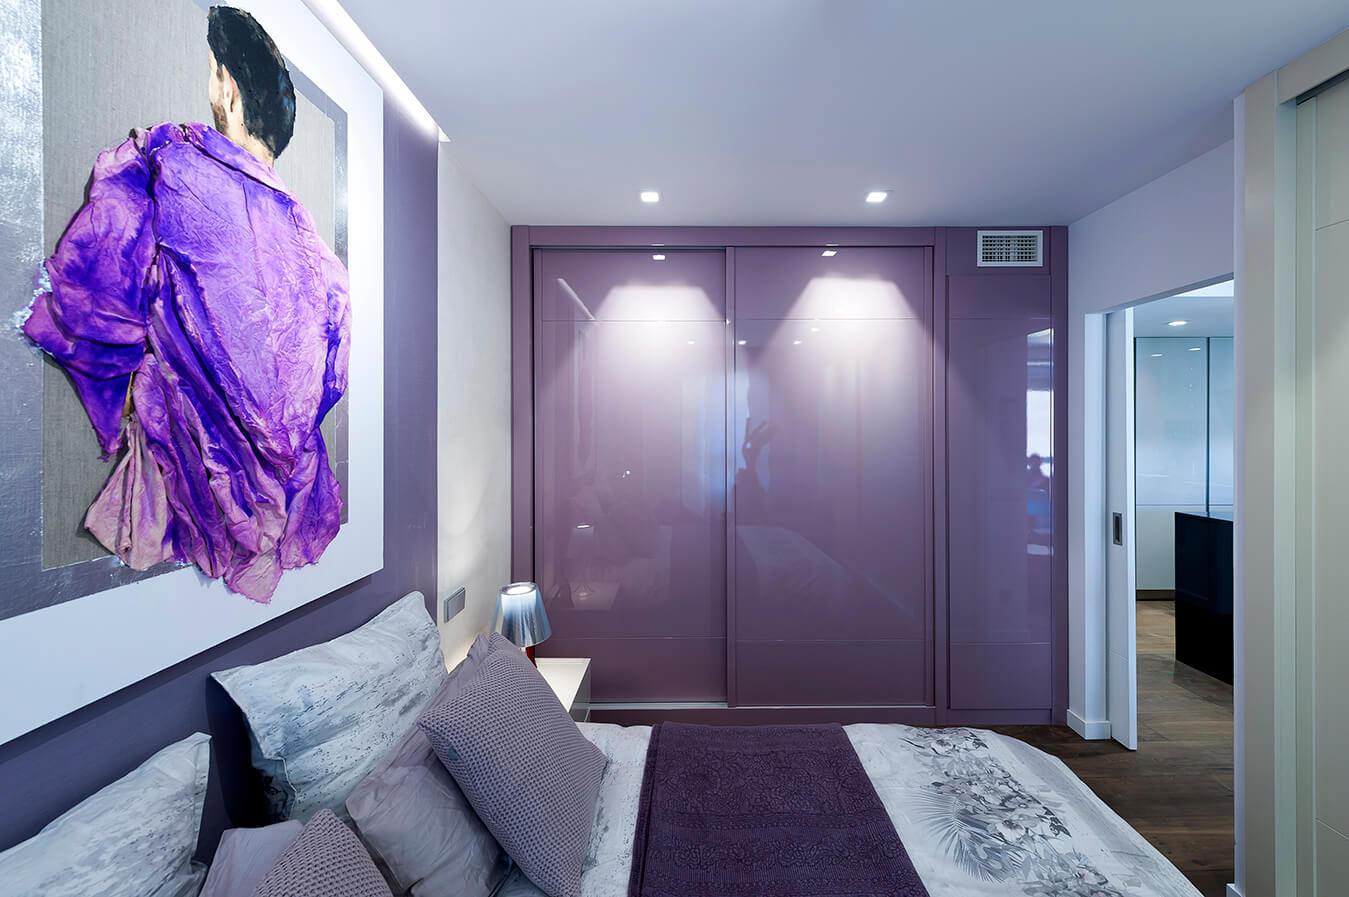 Reforma de apartamento en Madrid., Arkin Arkin Moderne Schlafzimmer MDF Lila/Violett